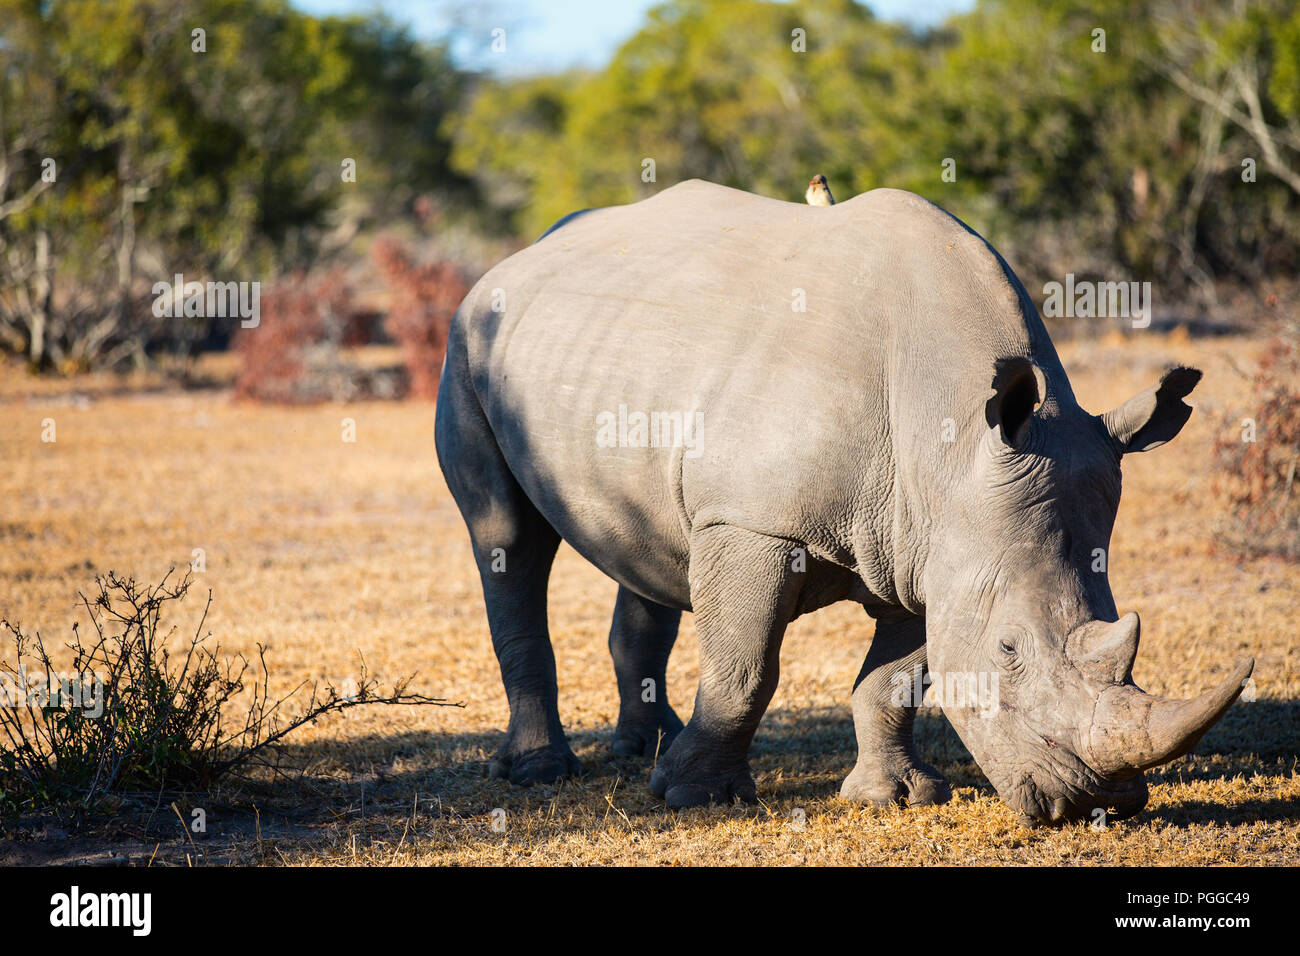 White rhino grazing in an open field in South Africa Stock Photo